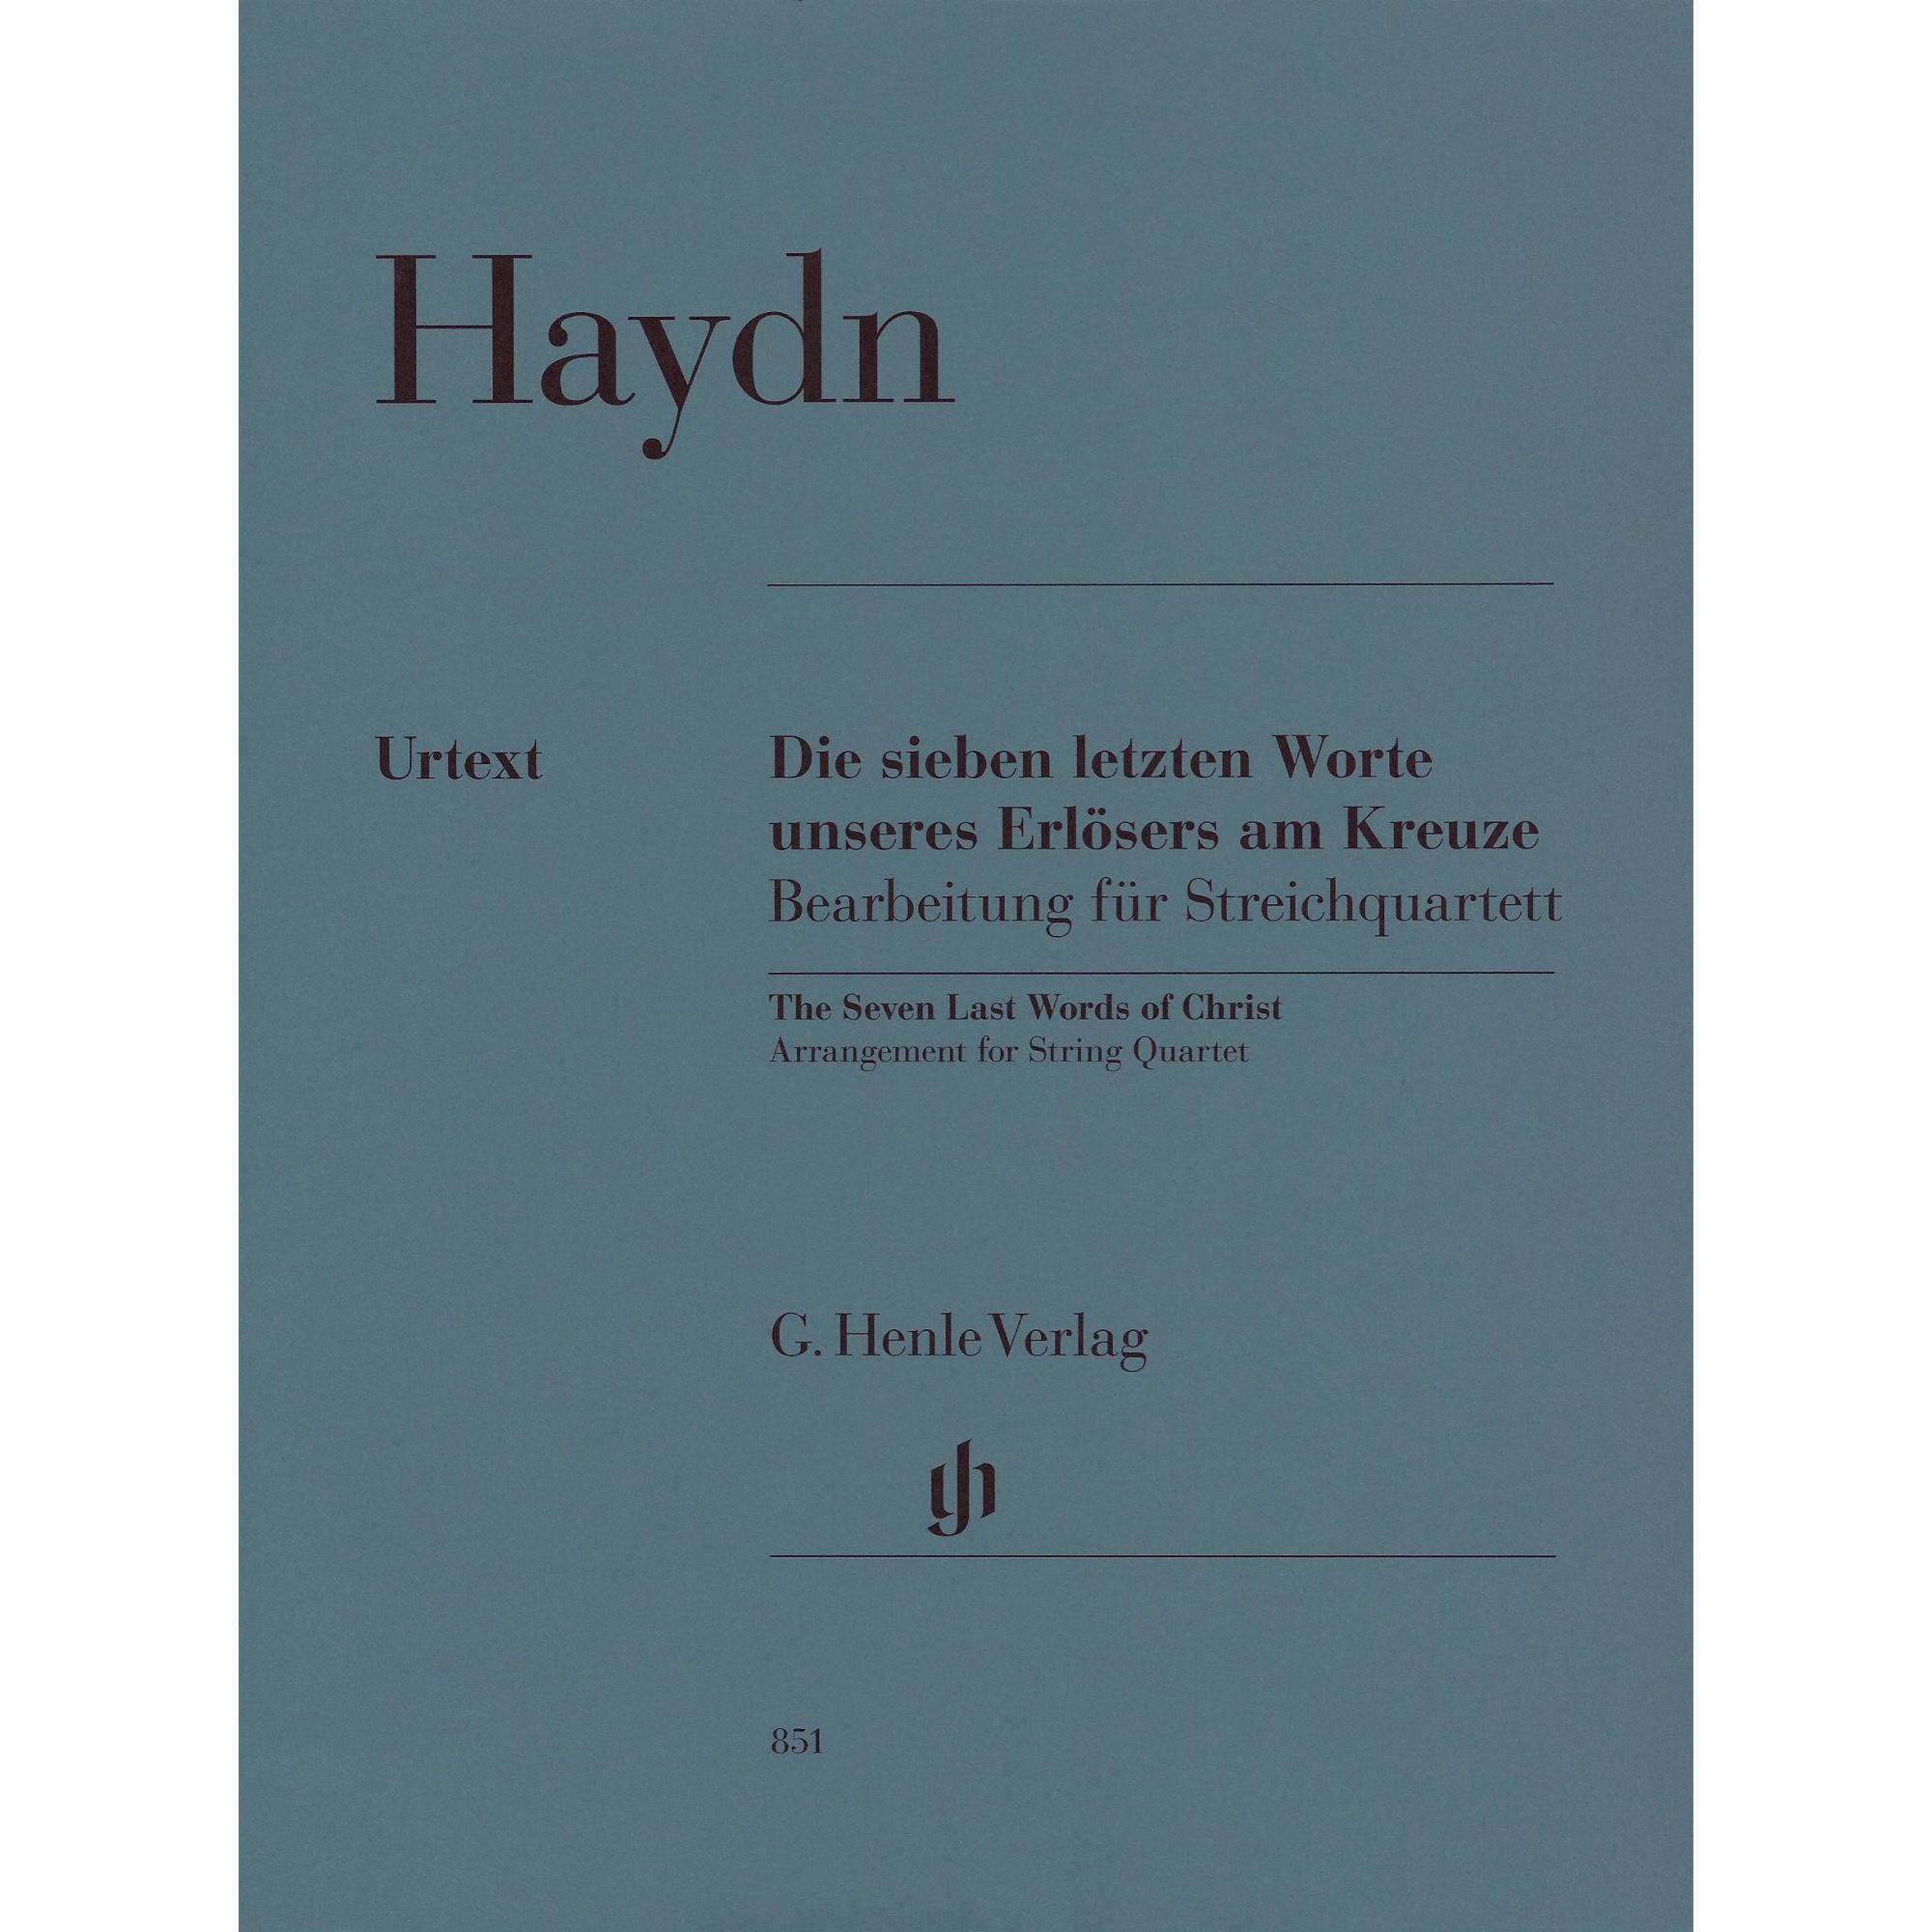 Haydn -- The Seven Last Words of Christ for String Quartet